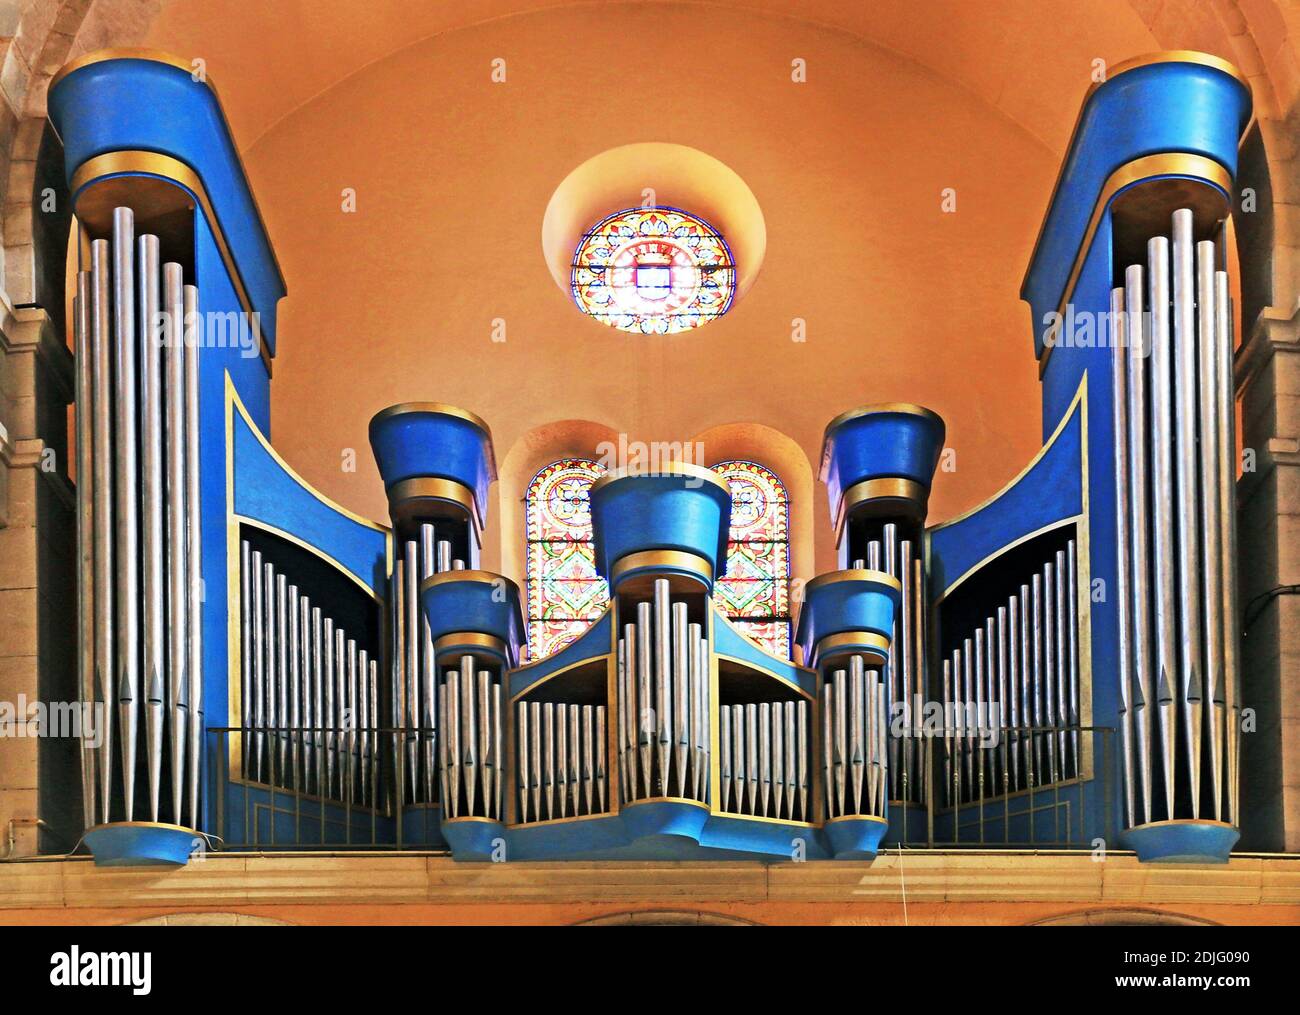 Große Kirchenorgeln im bunten Barockstil. Stockfoto